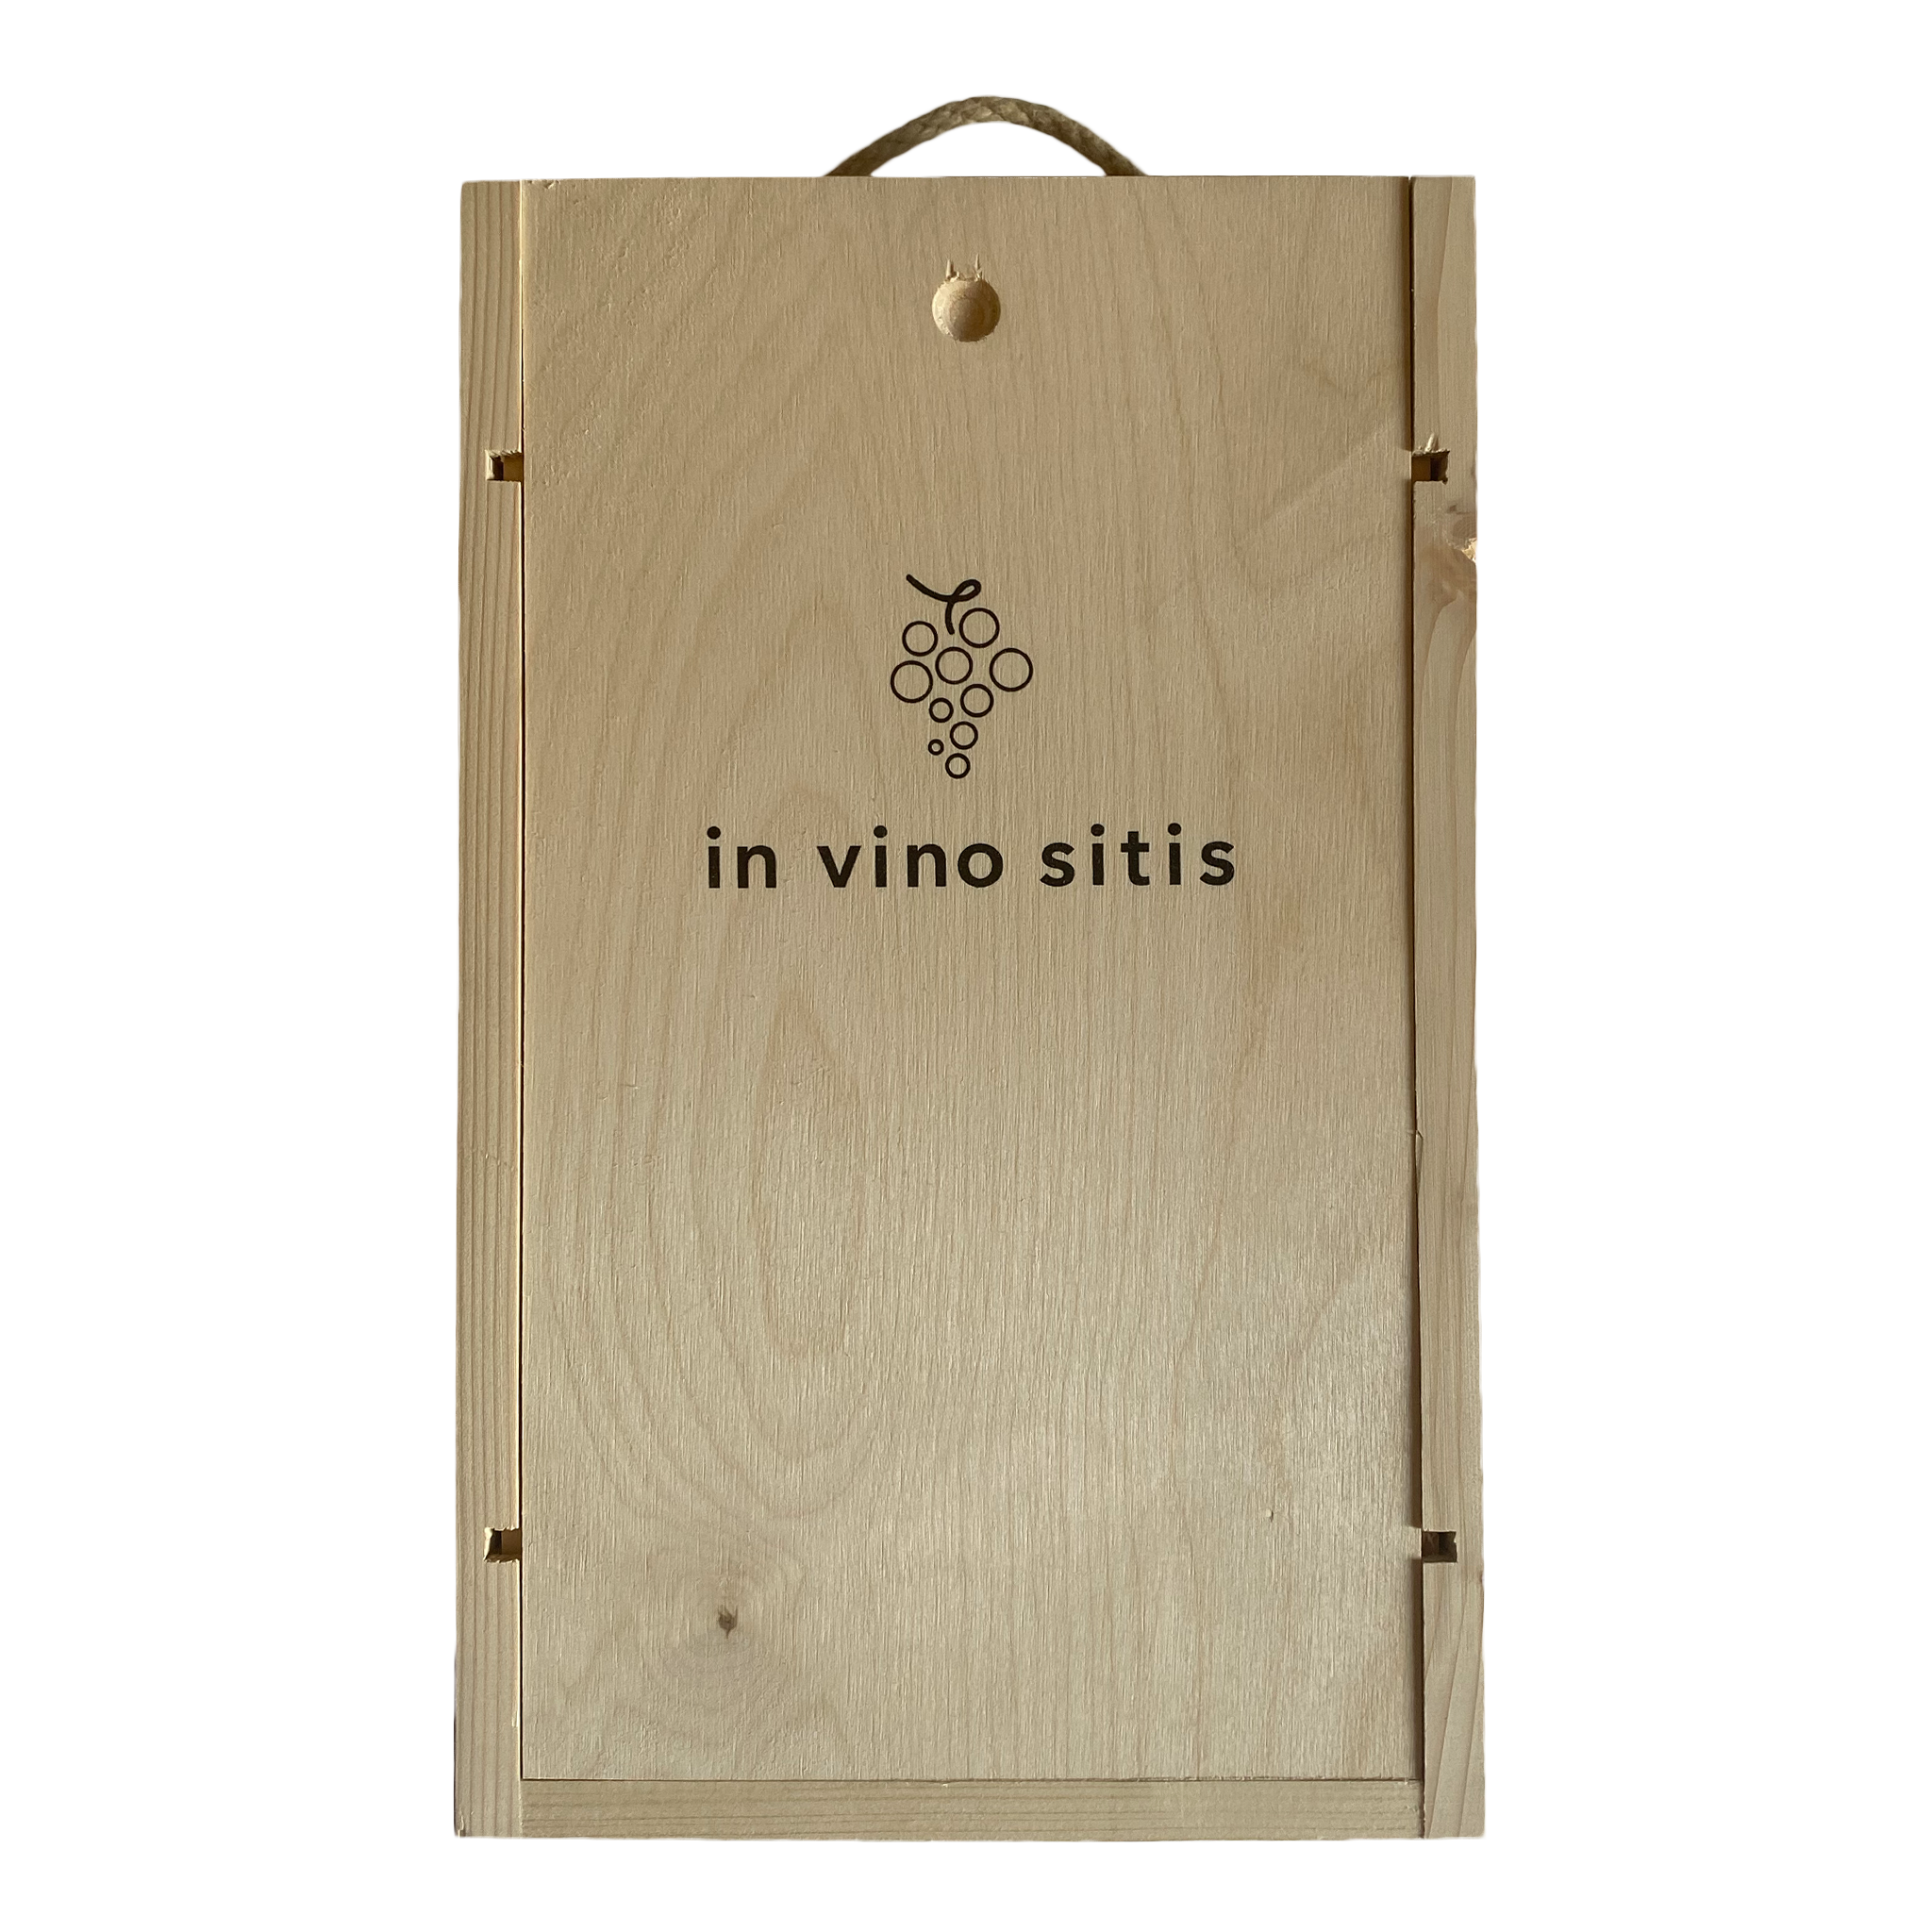 Scatola in legno per vino (2 bottiglie)